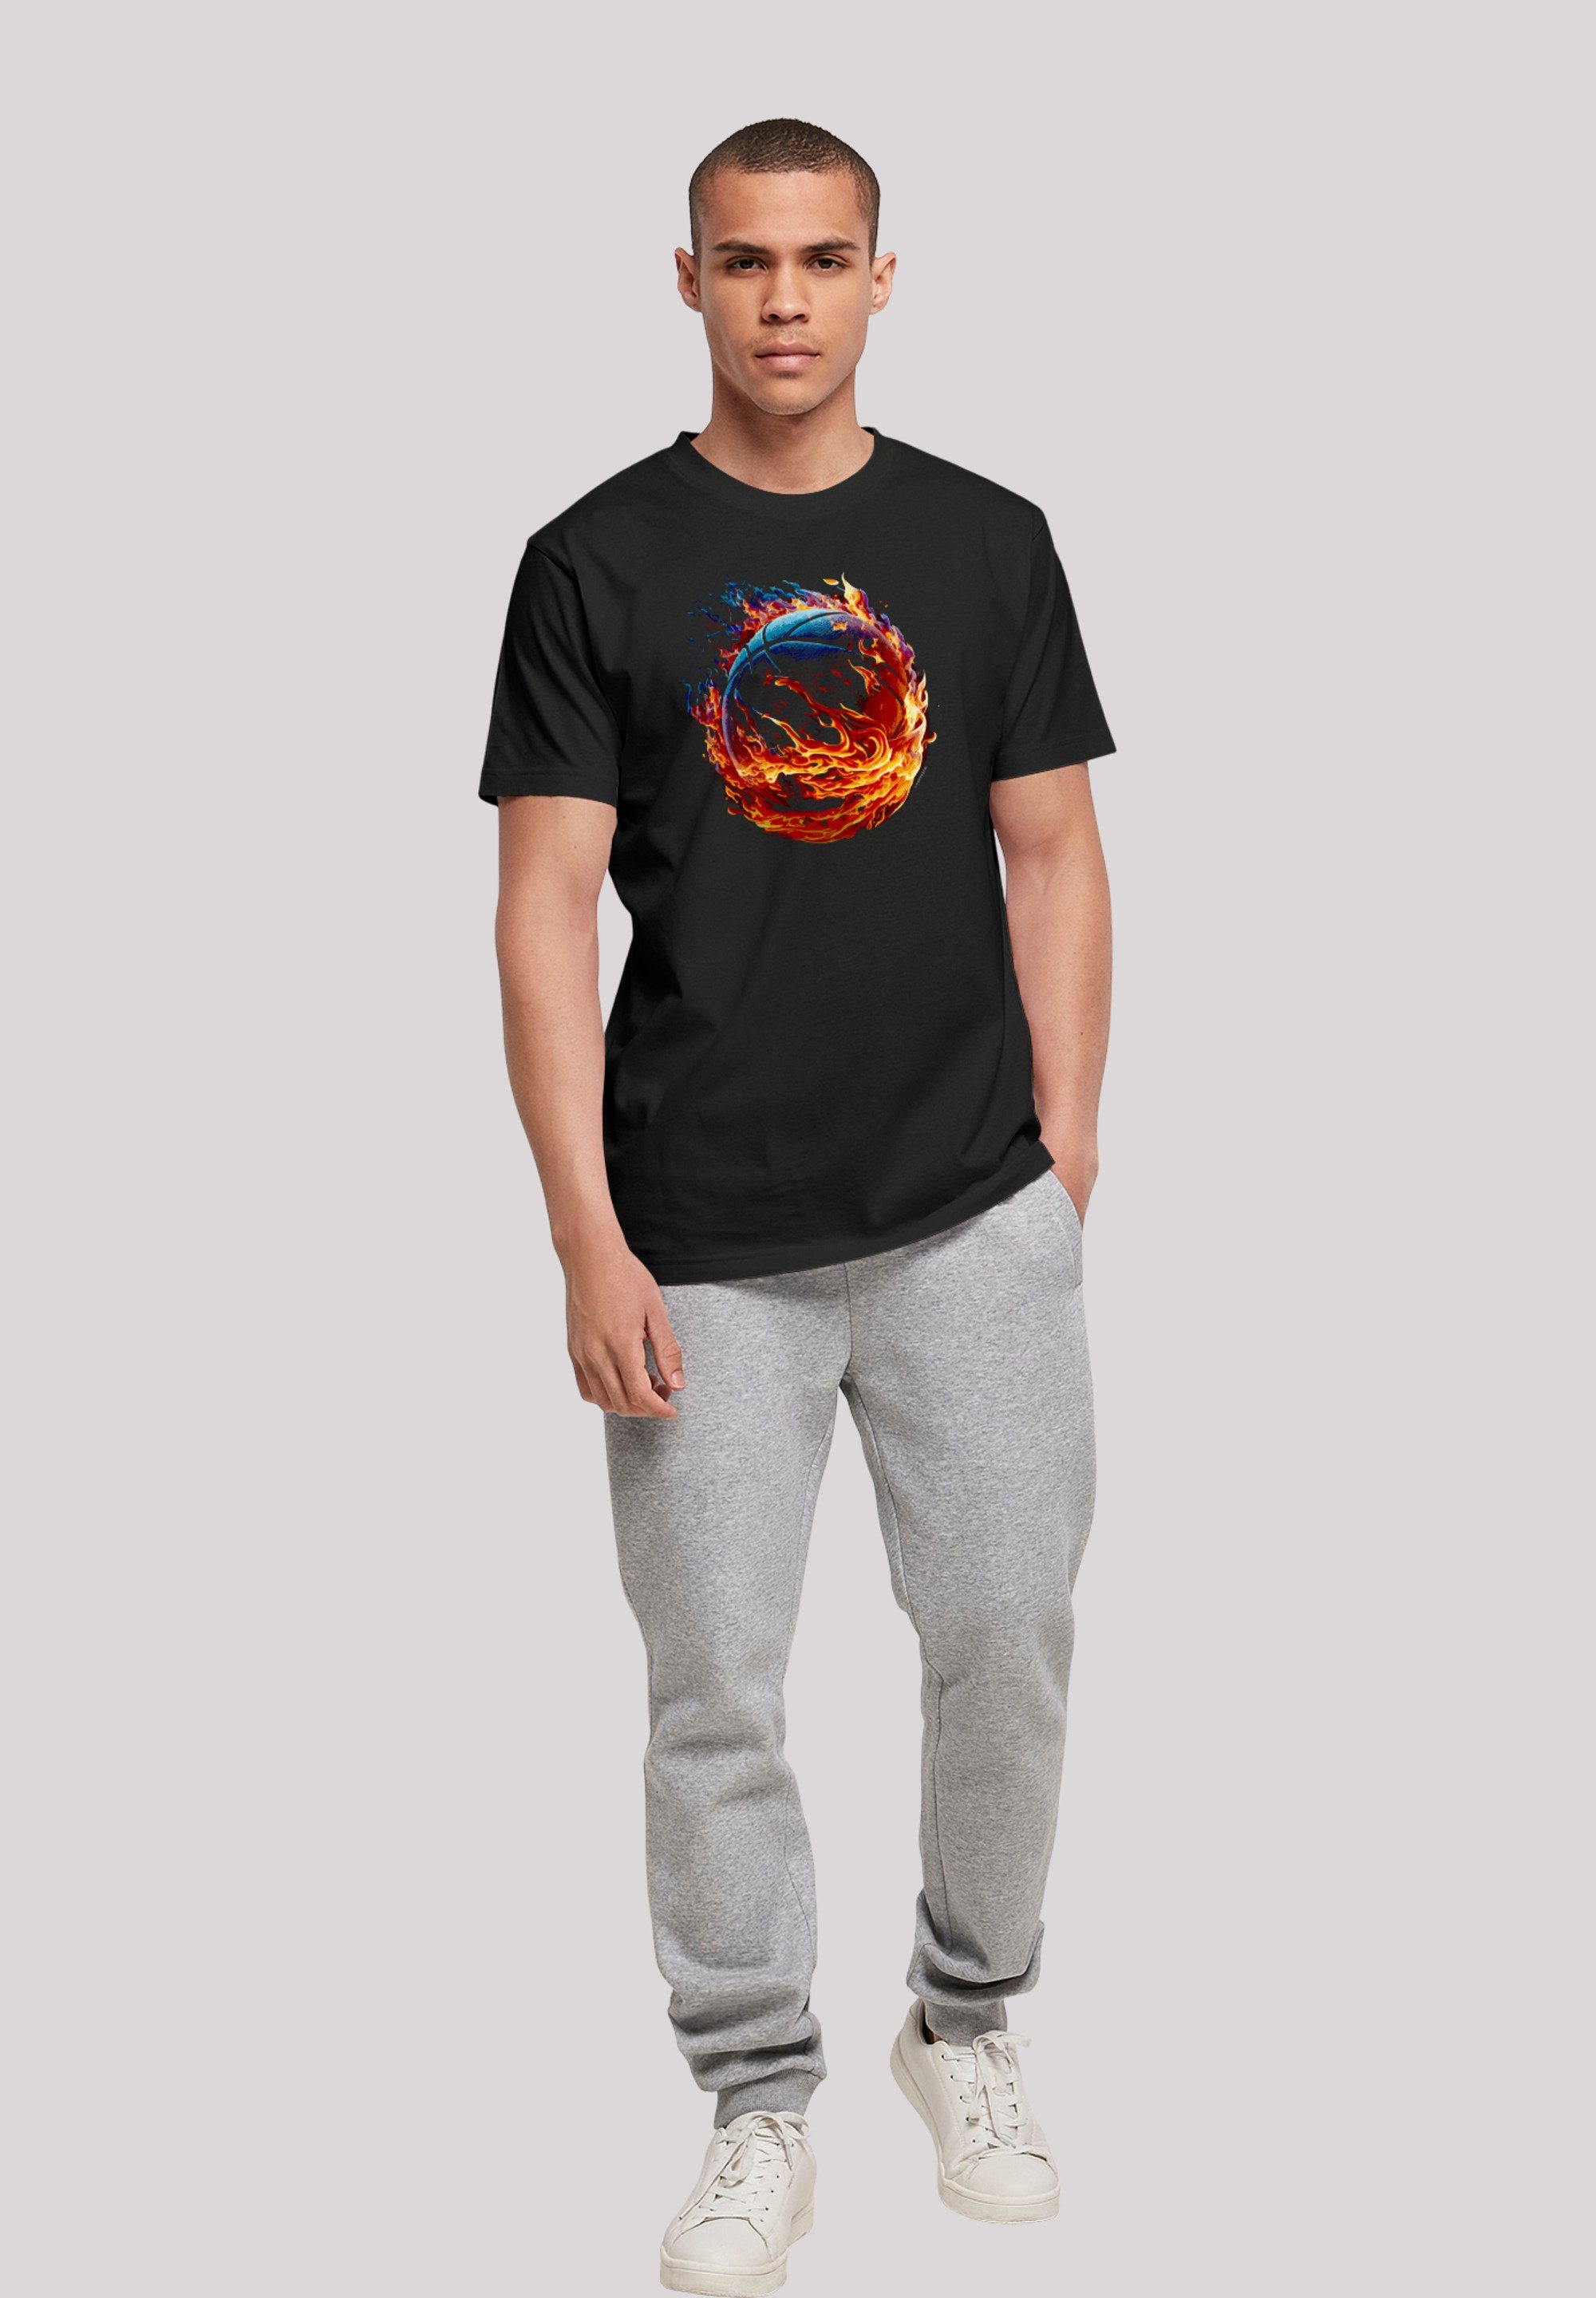 F4NT4STIC T-Shirt Basketball Print Fire UNISEX On schwarz Sport